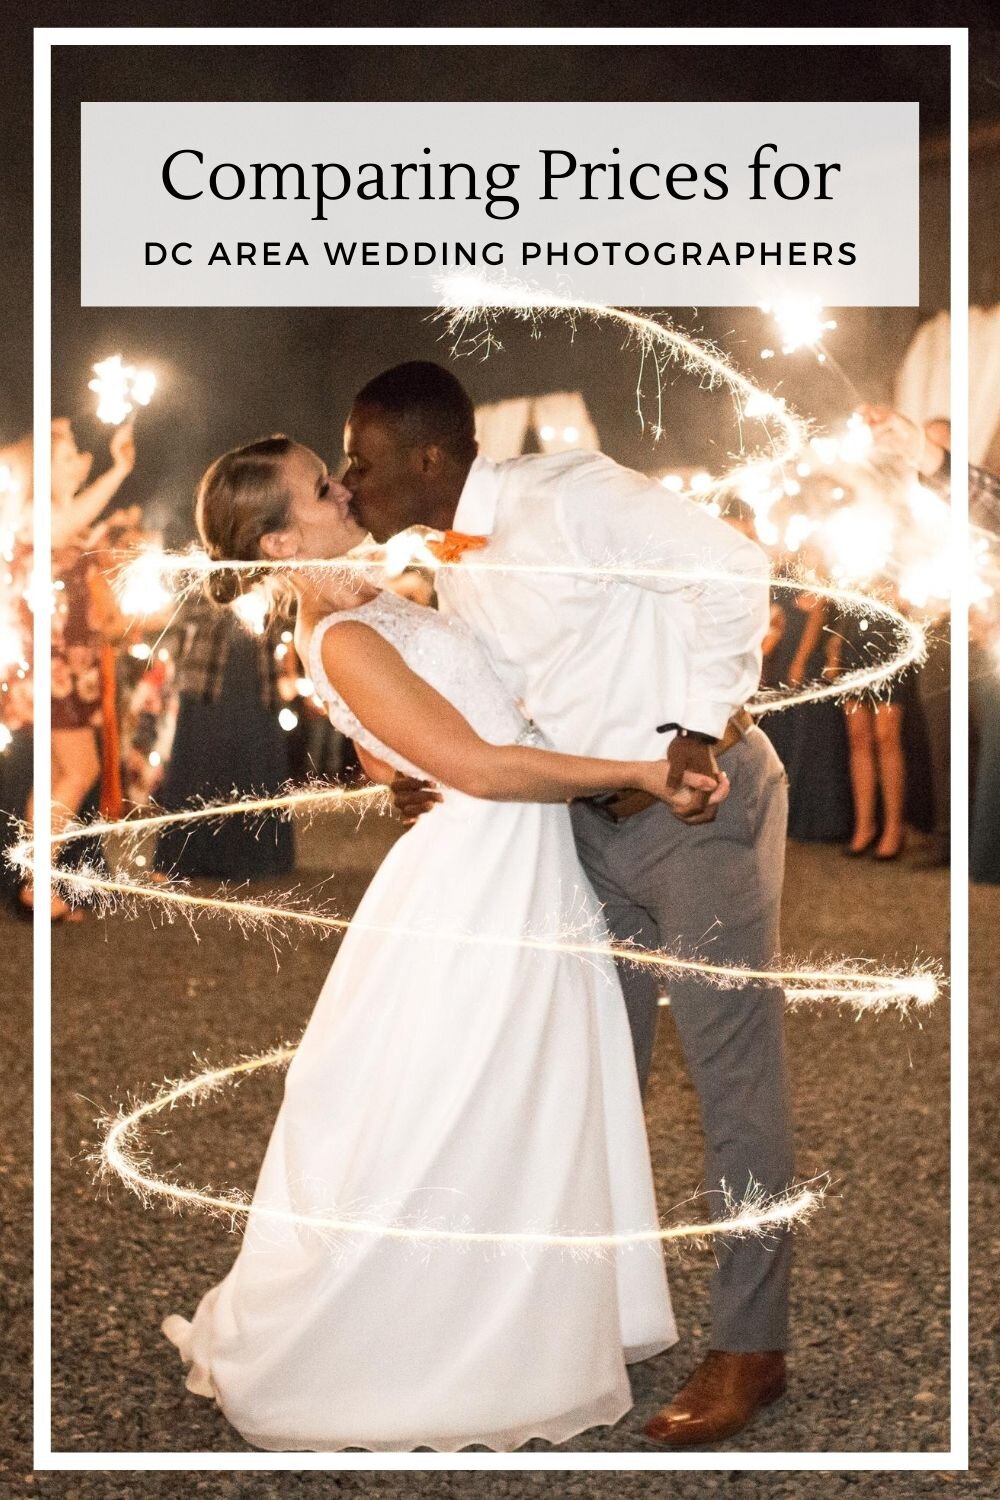 Comparing wedding photographer prices